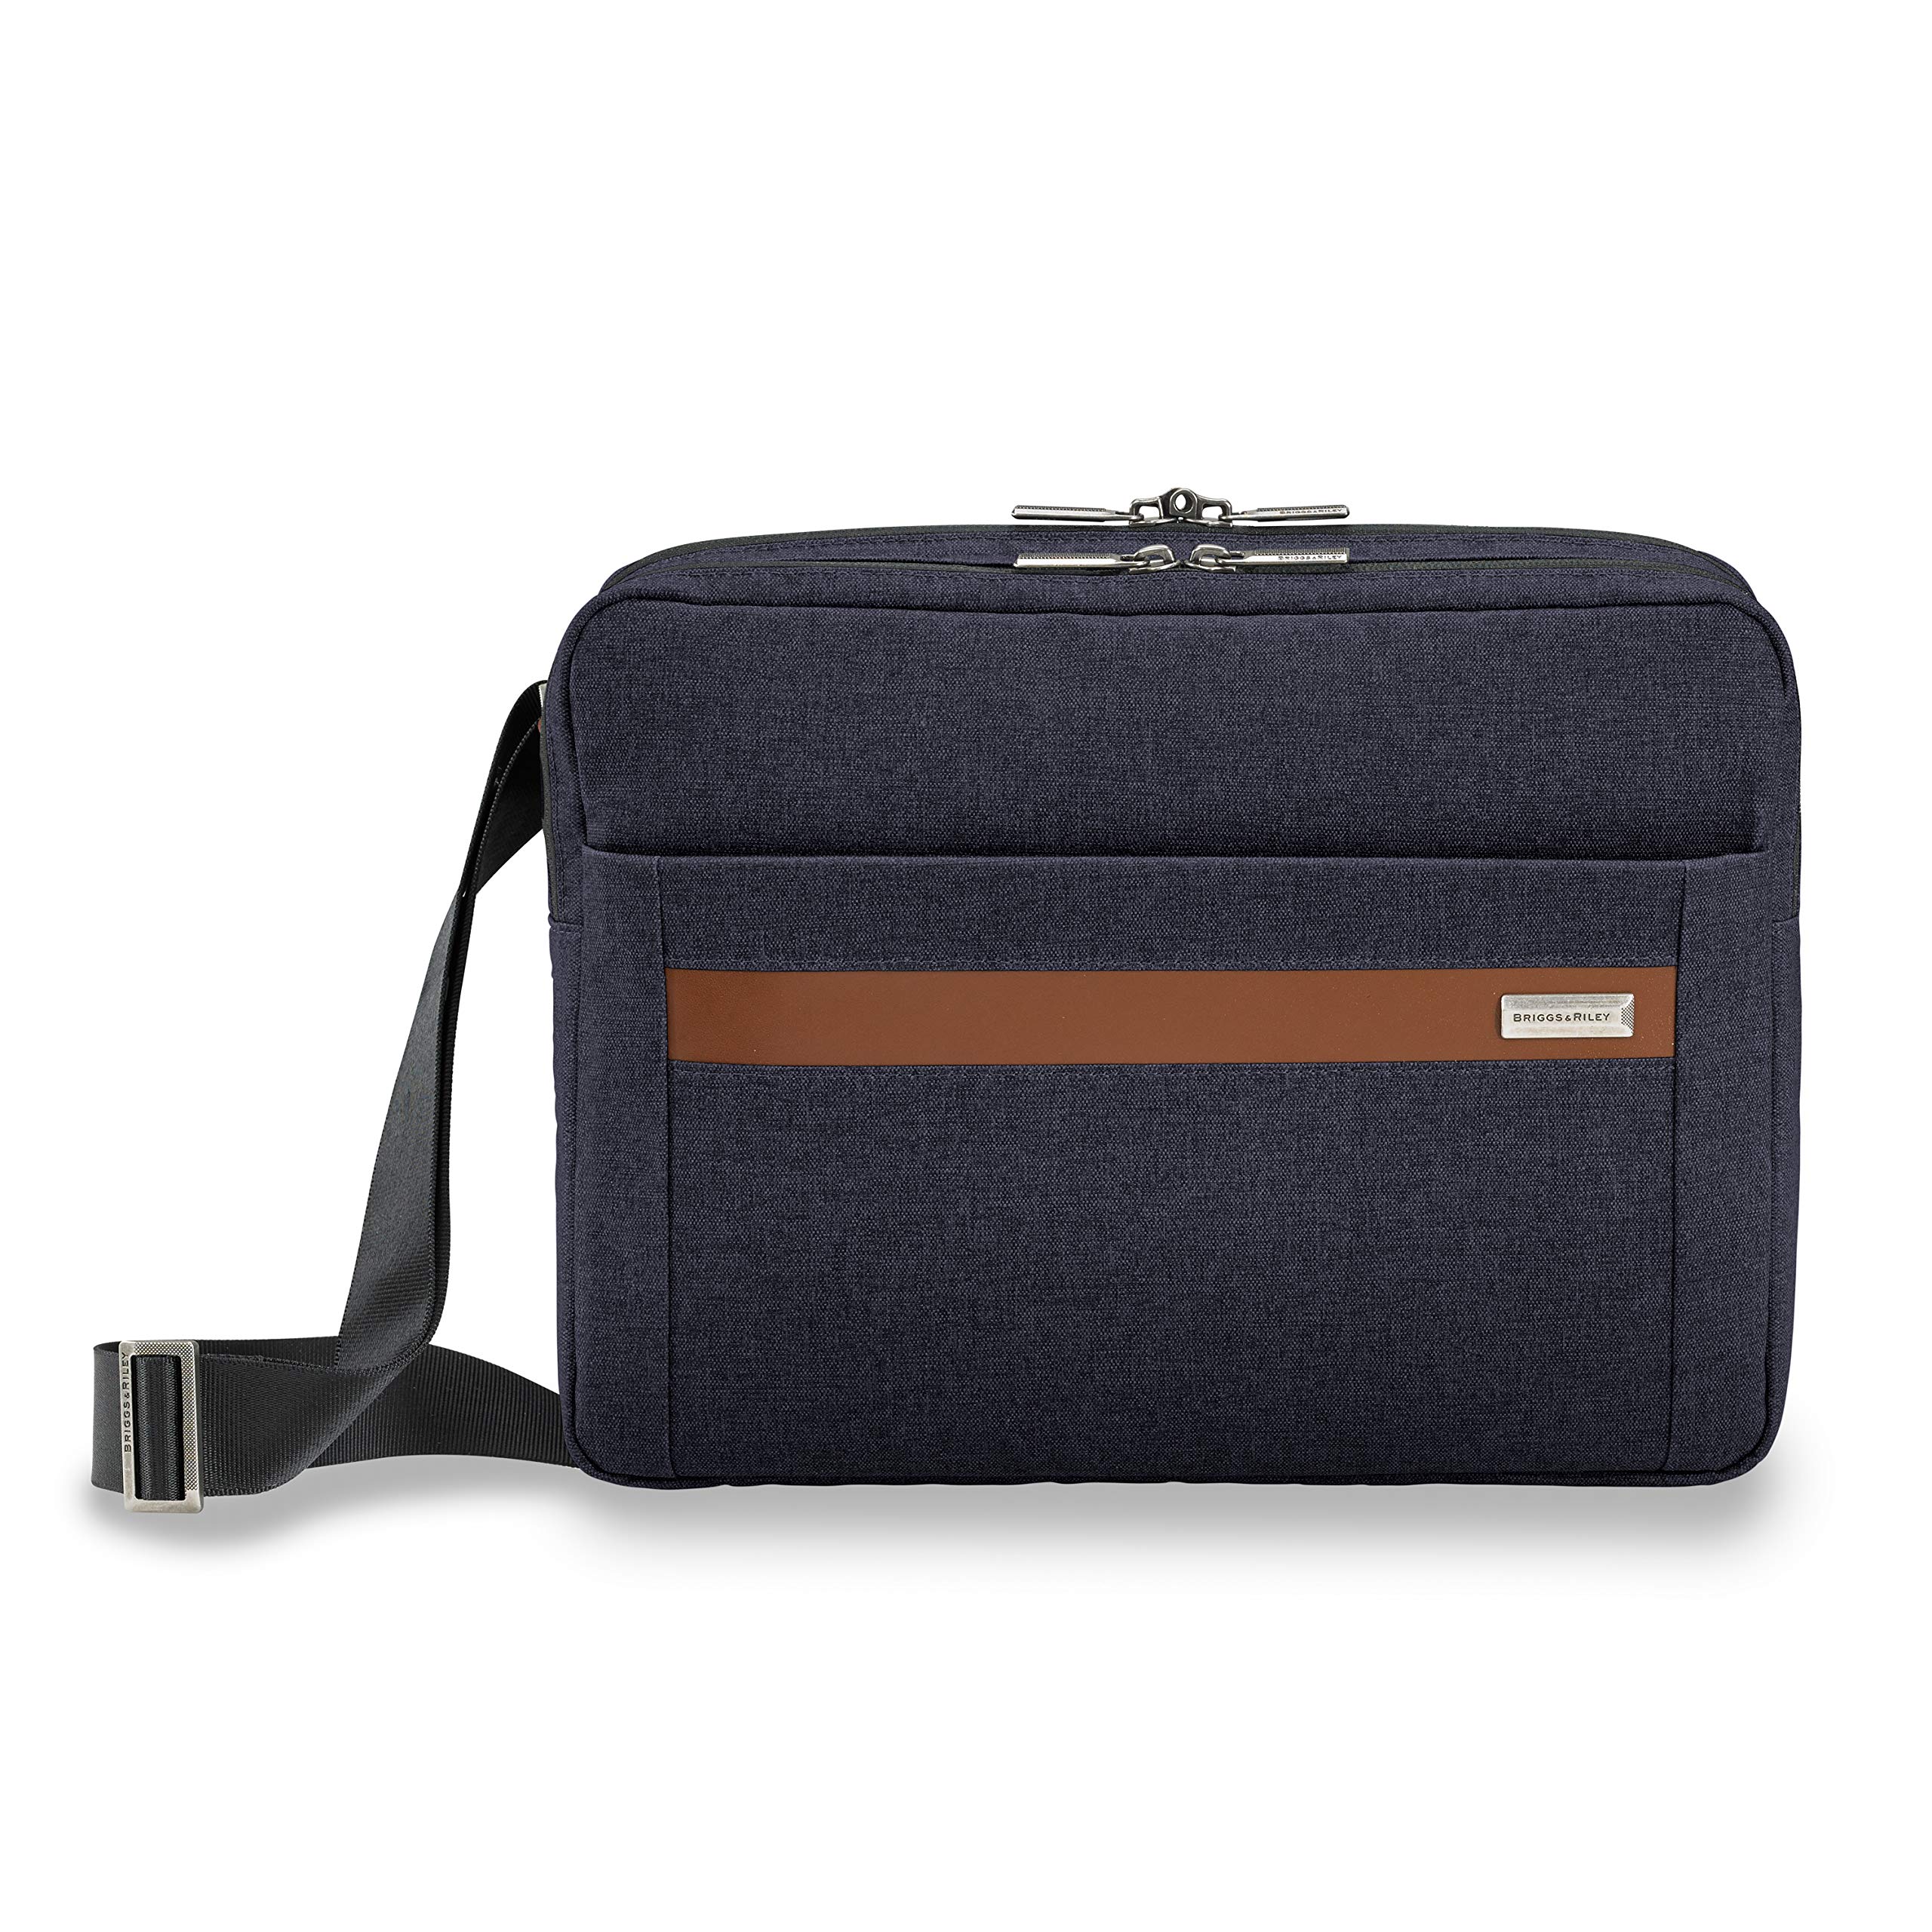 Briggs & Riley Kinzie Street-Micro Messenger Laptop Bag, Navy, One Size